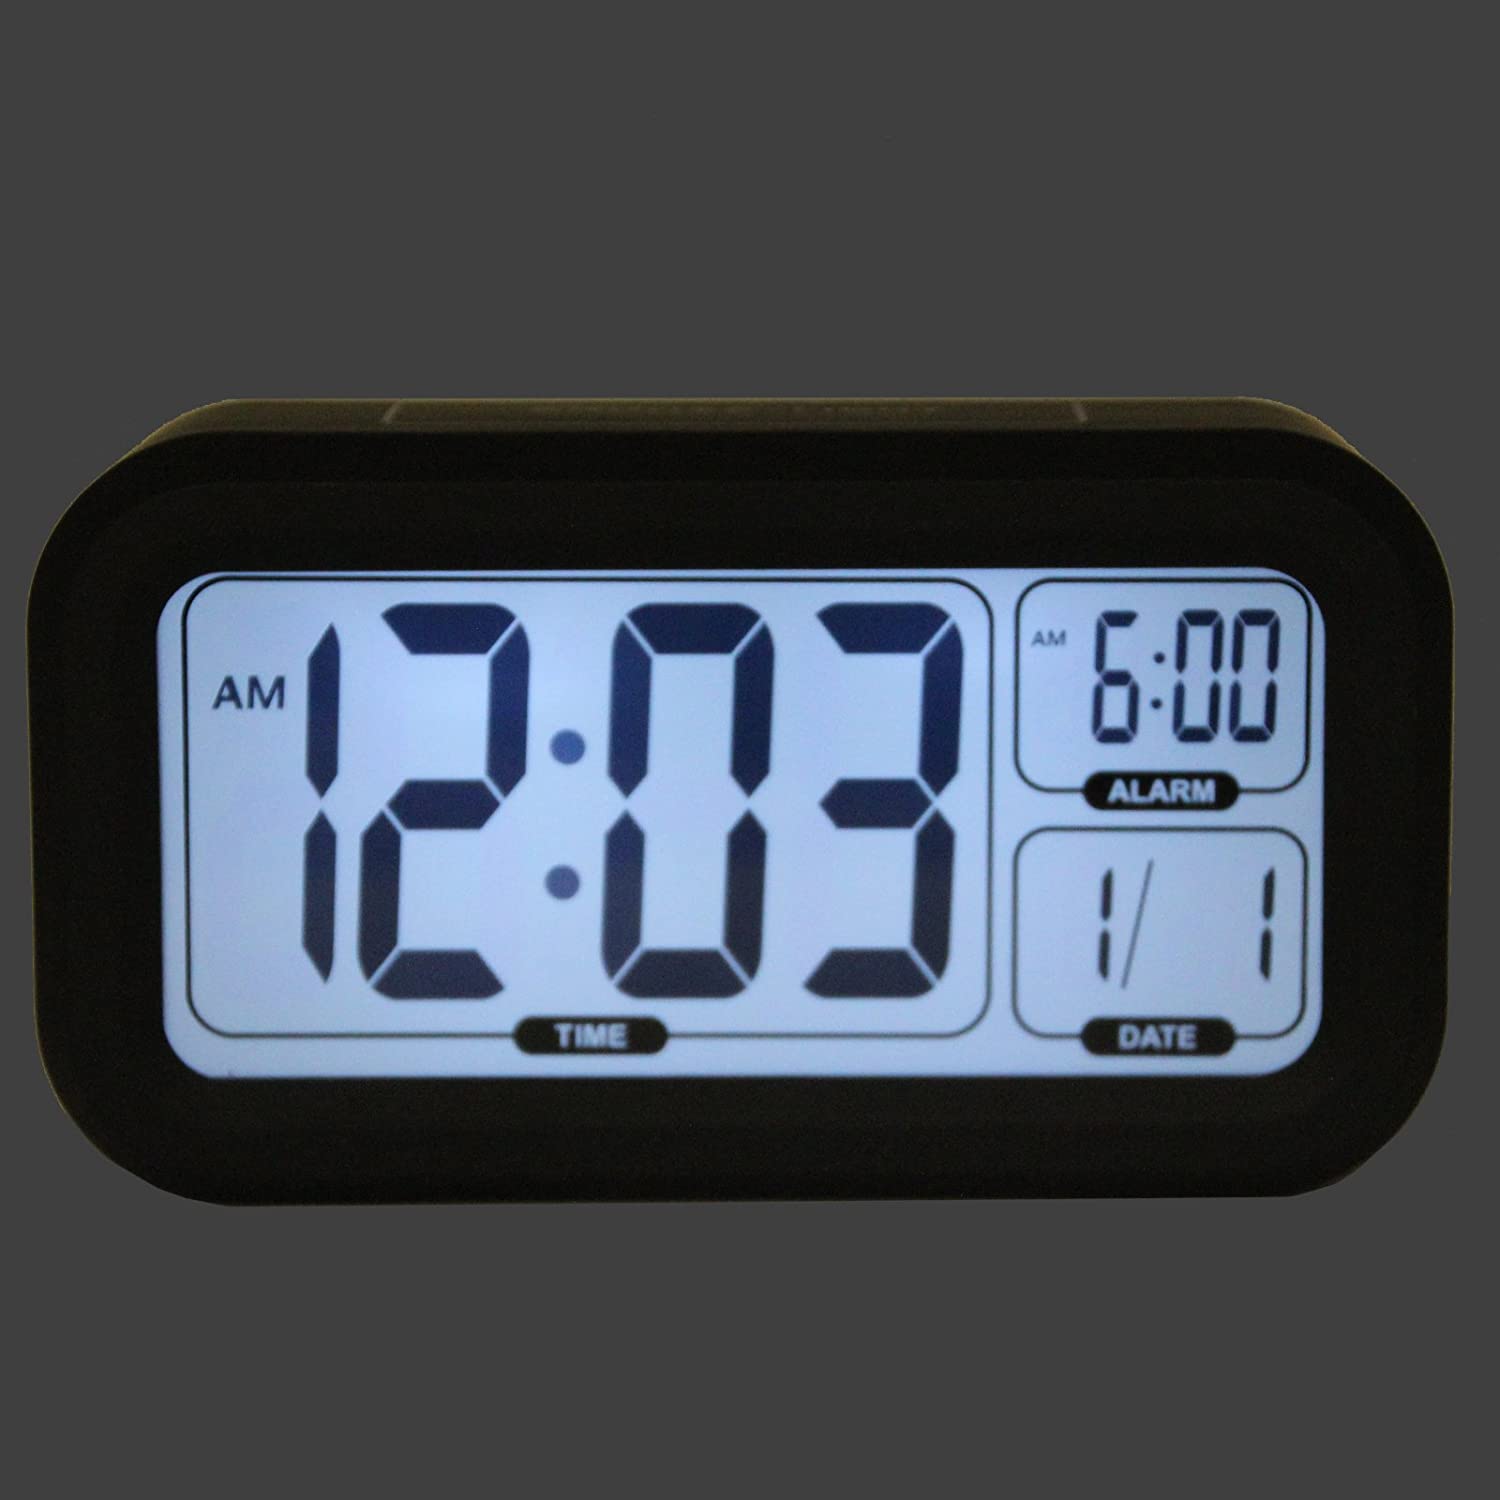 Timelink - Digital Touch Sensor Travel Home Use Alarm Clock, Snooze, Automatic Dimming Smart Night Light, Black